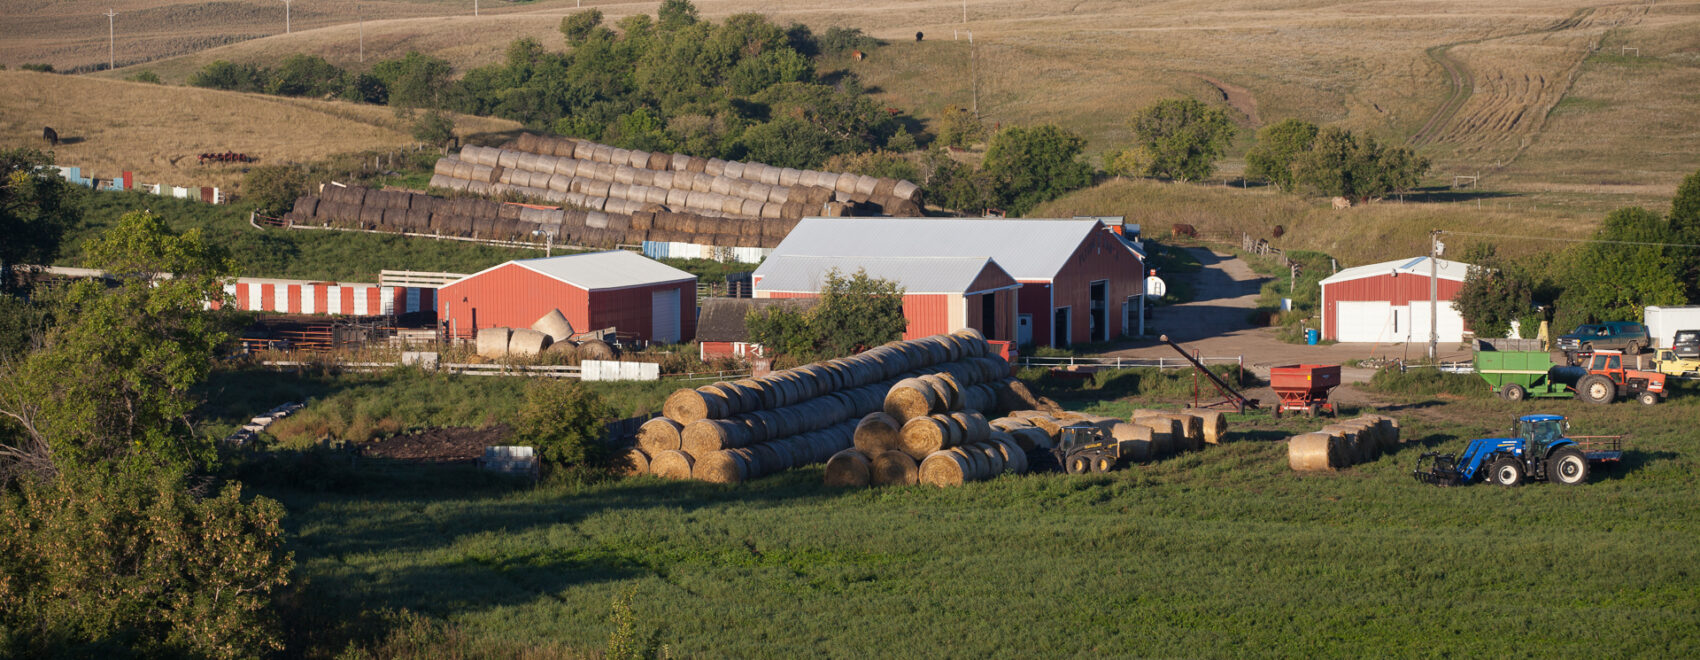 photo of a farm